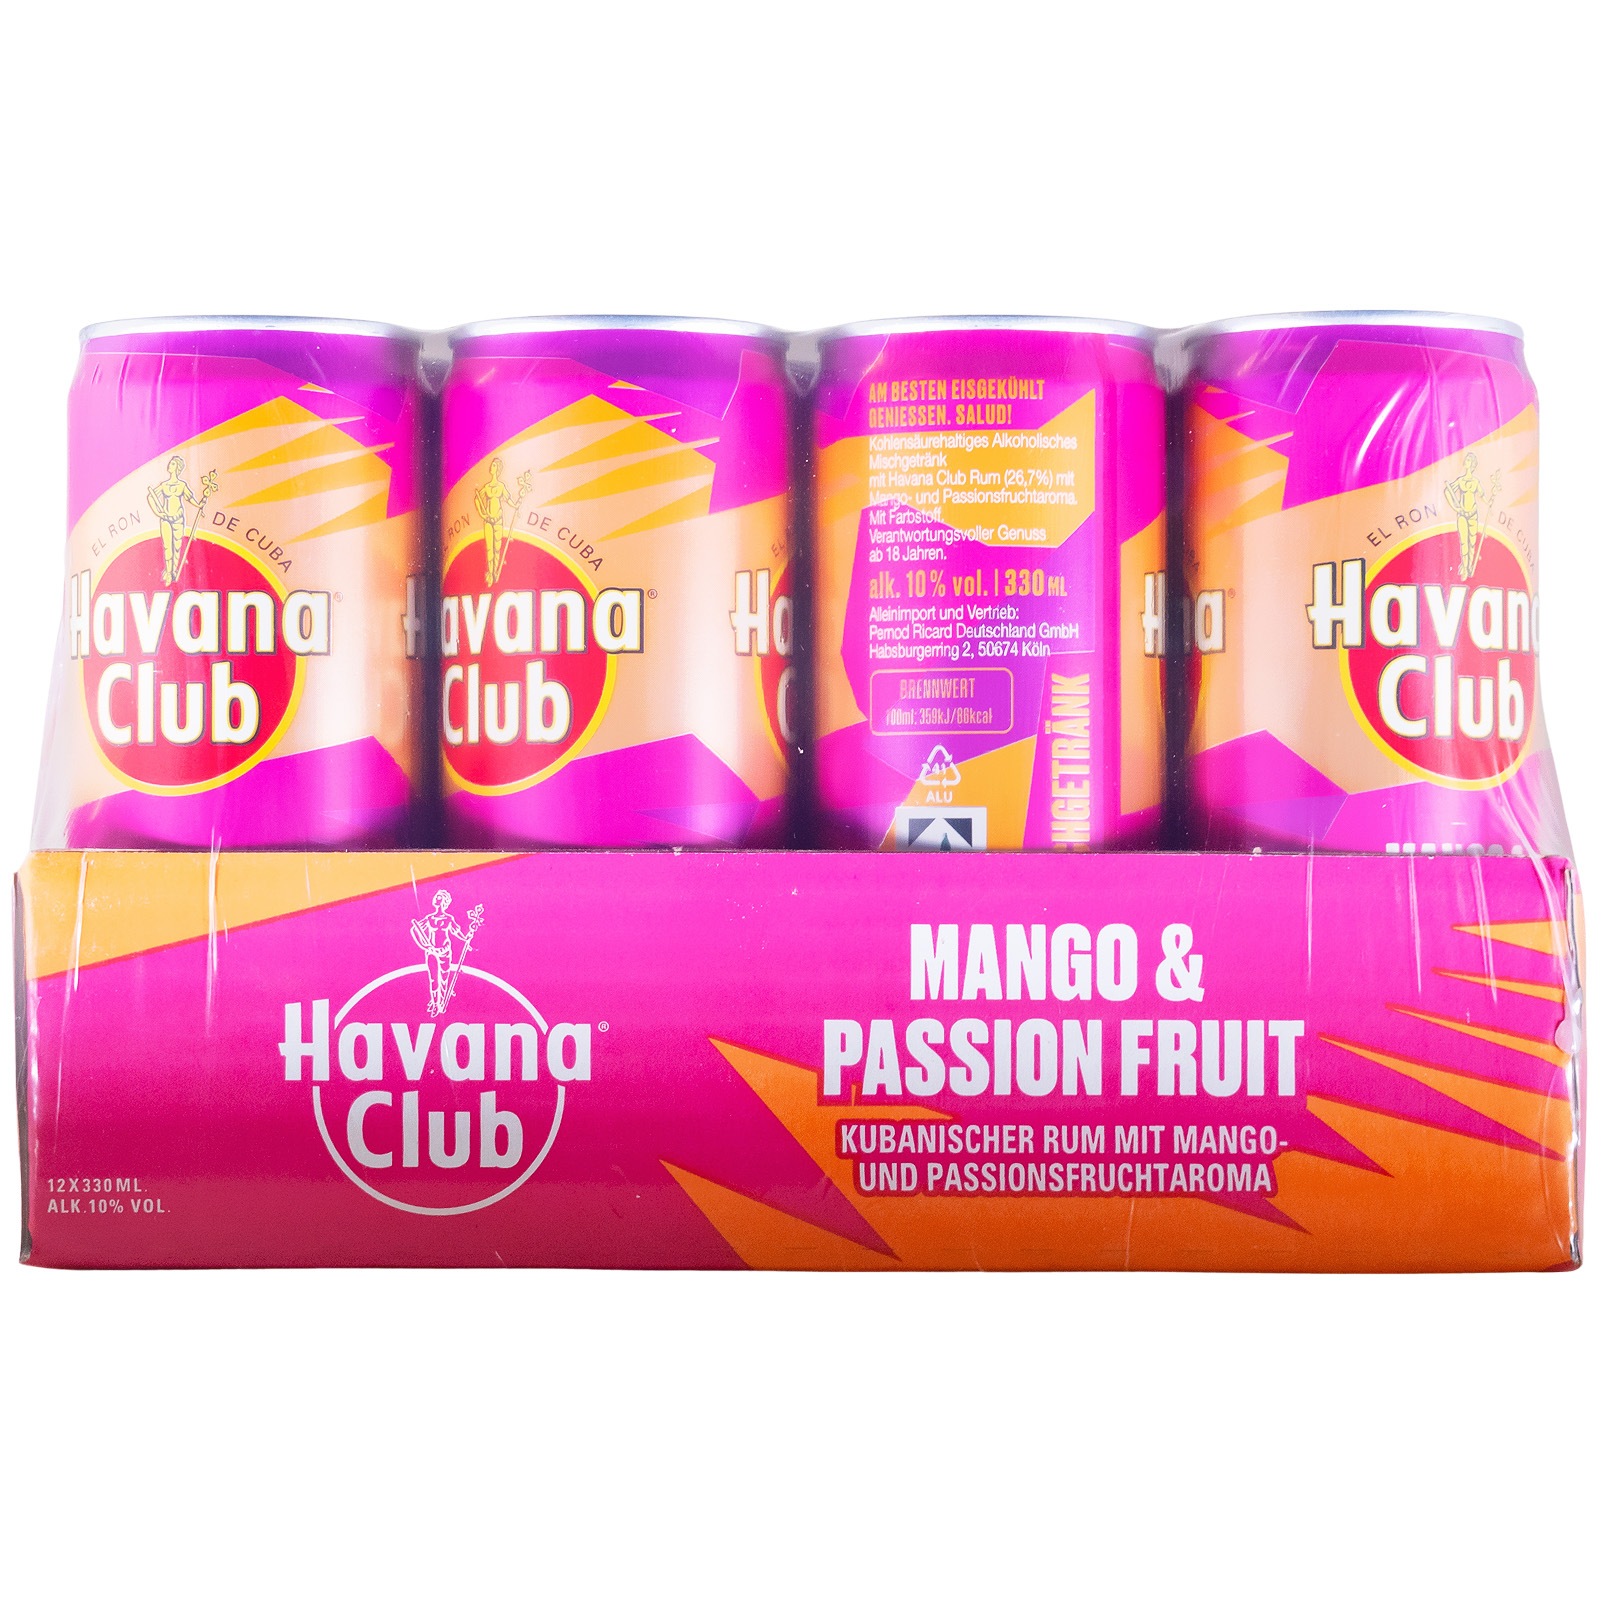 Paket [12 x 0,33L] Havana Club Mango & Passion Fruit - 3,96L 10% vol